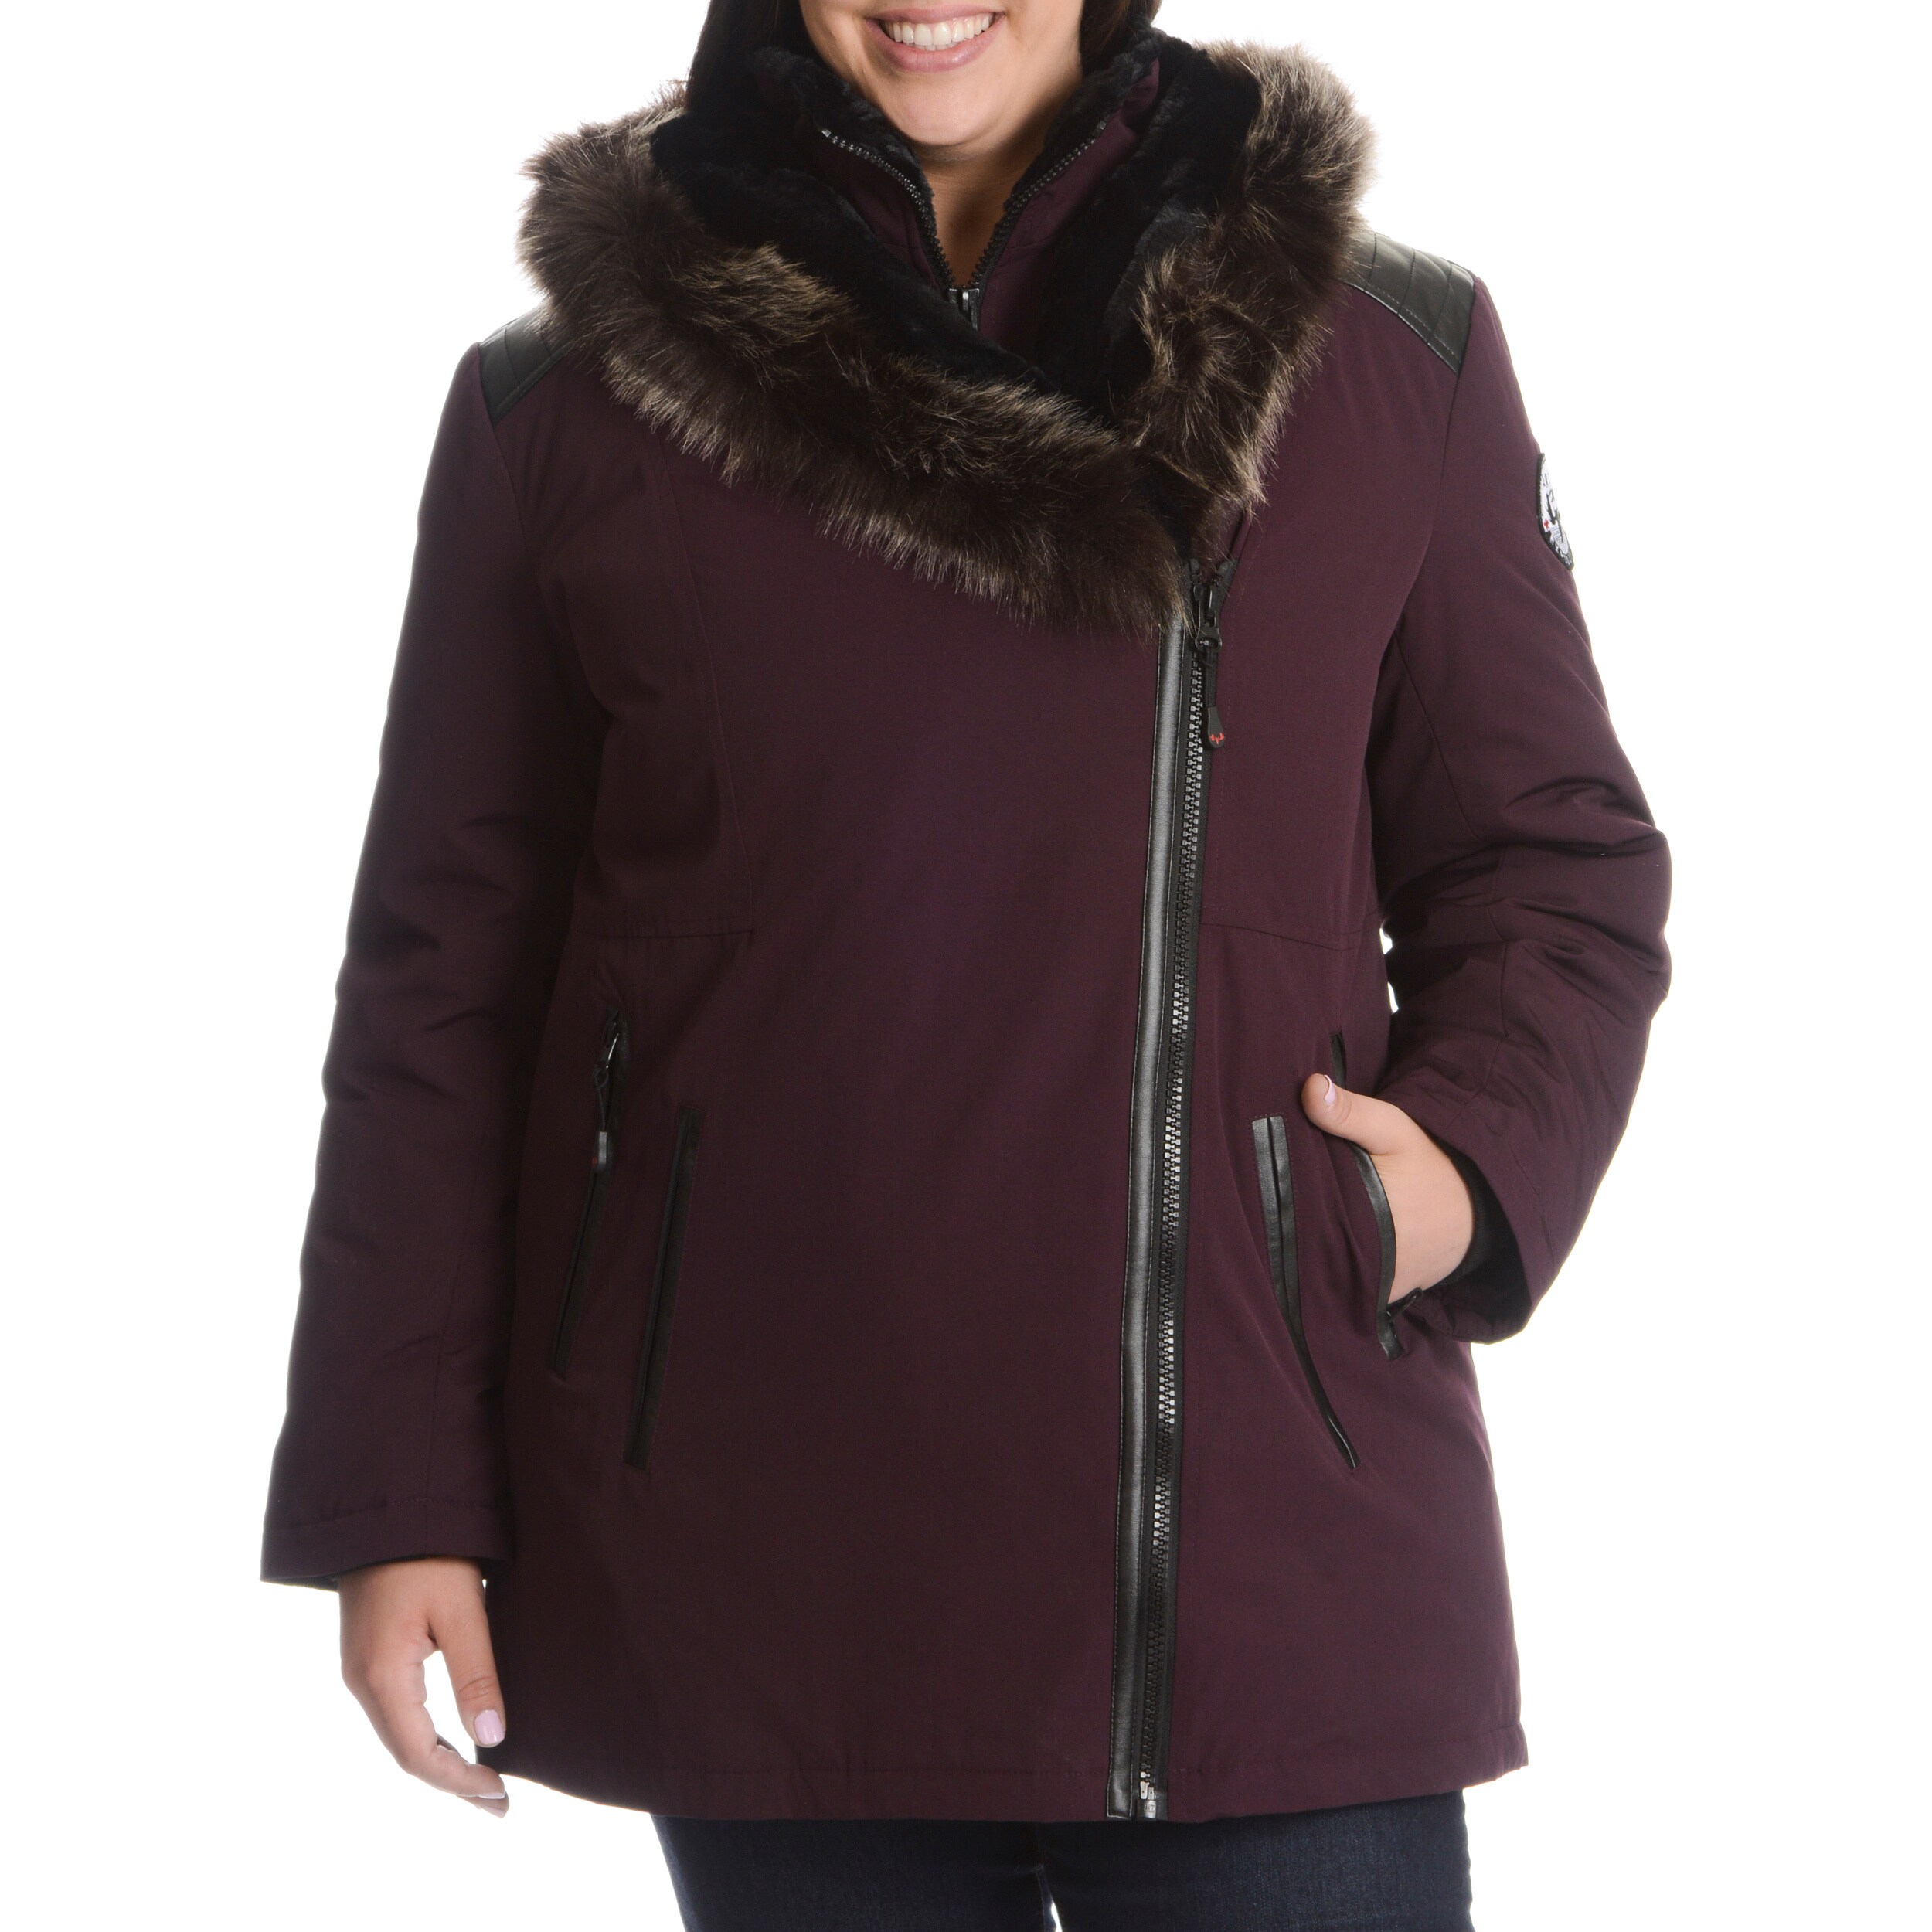 Græsse længde Bakterie Women's Plus Size Down Jacket with Faux Fur Trim Hood - On Sale - Overstock  - 10568743